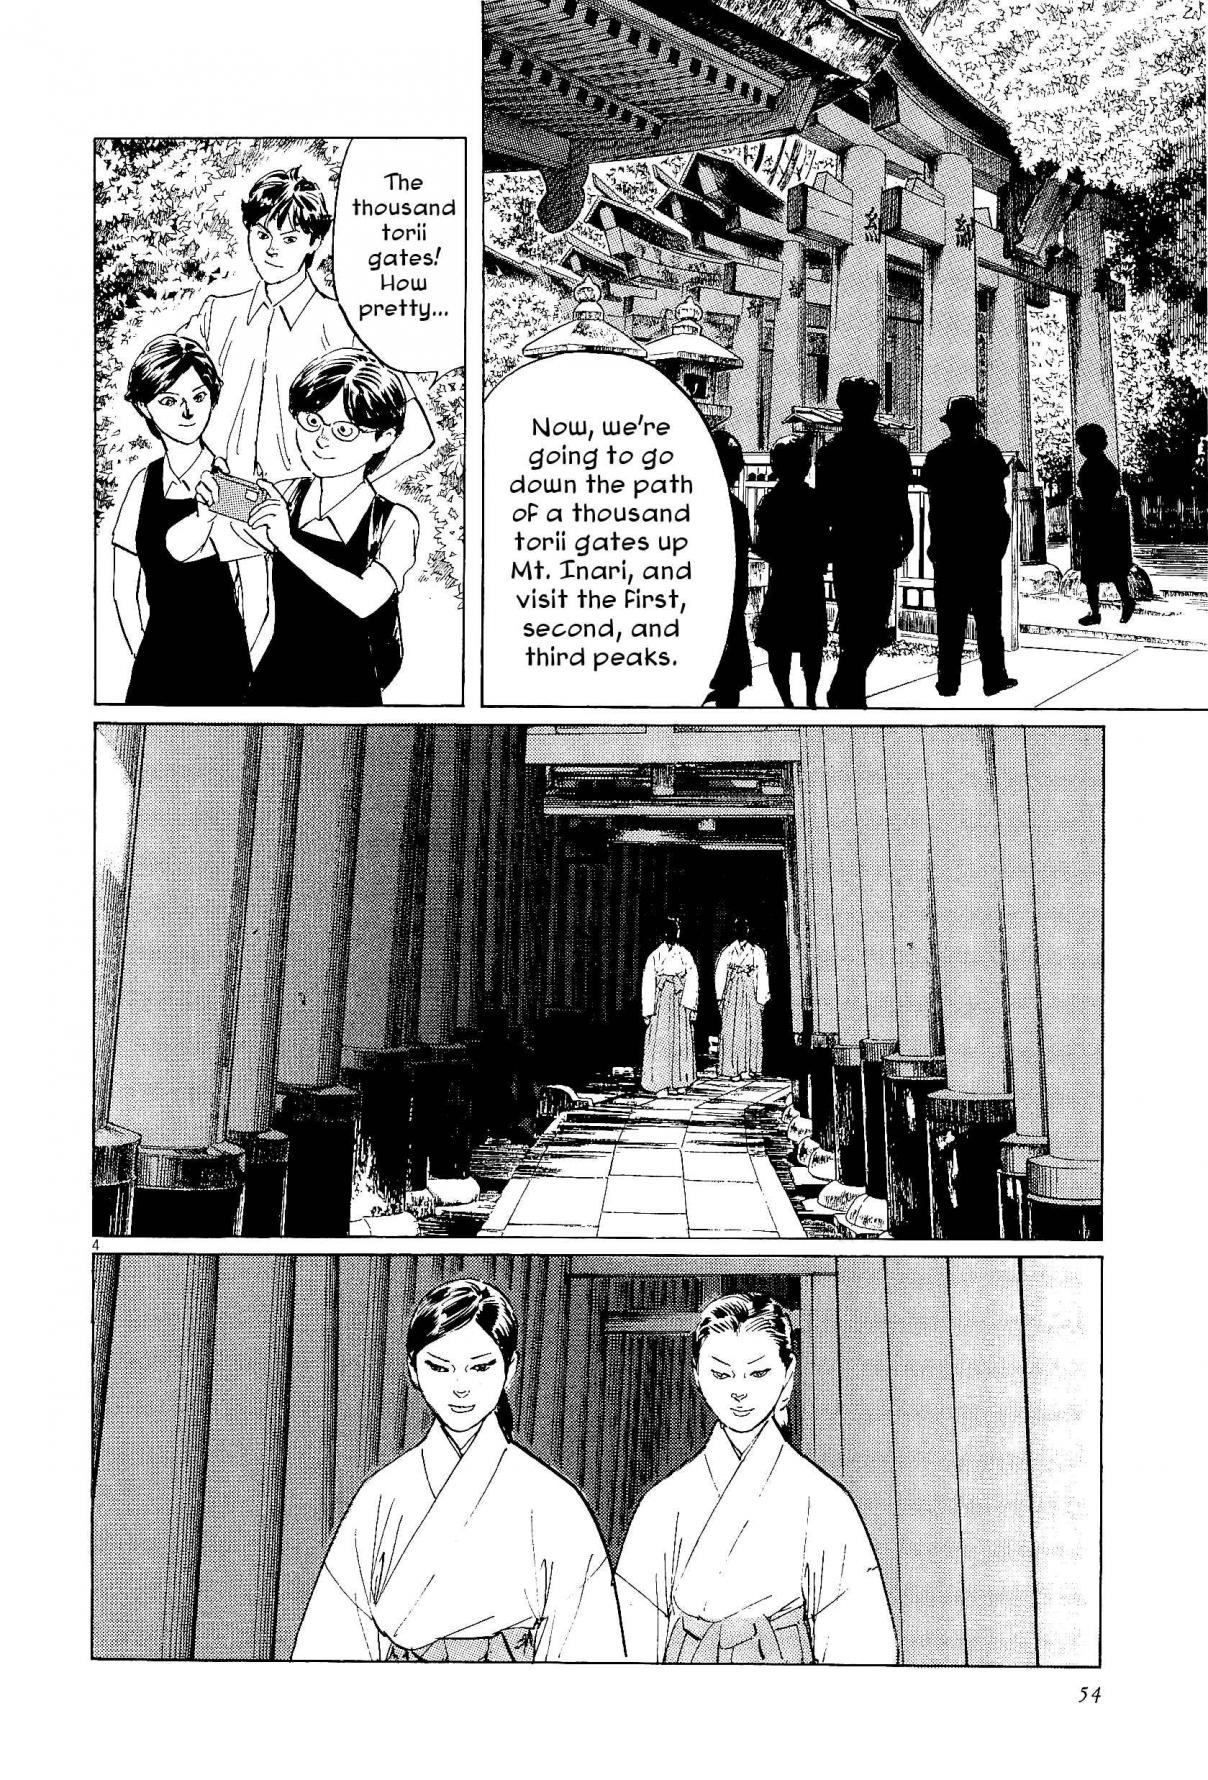 The Case Records of Professor Munakata Vol. 11 Ch. 34 The Endless Corridor